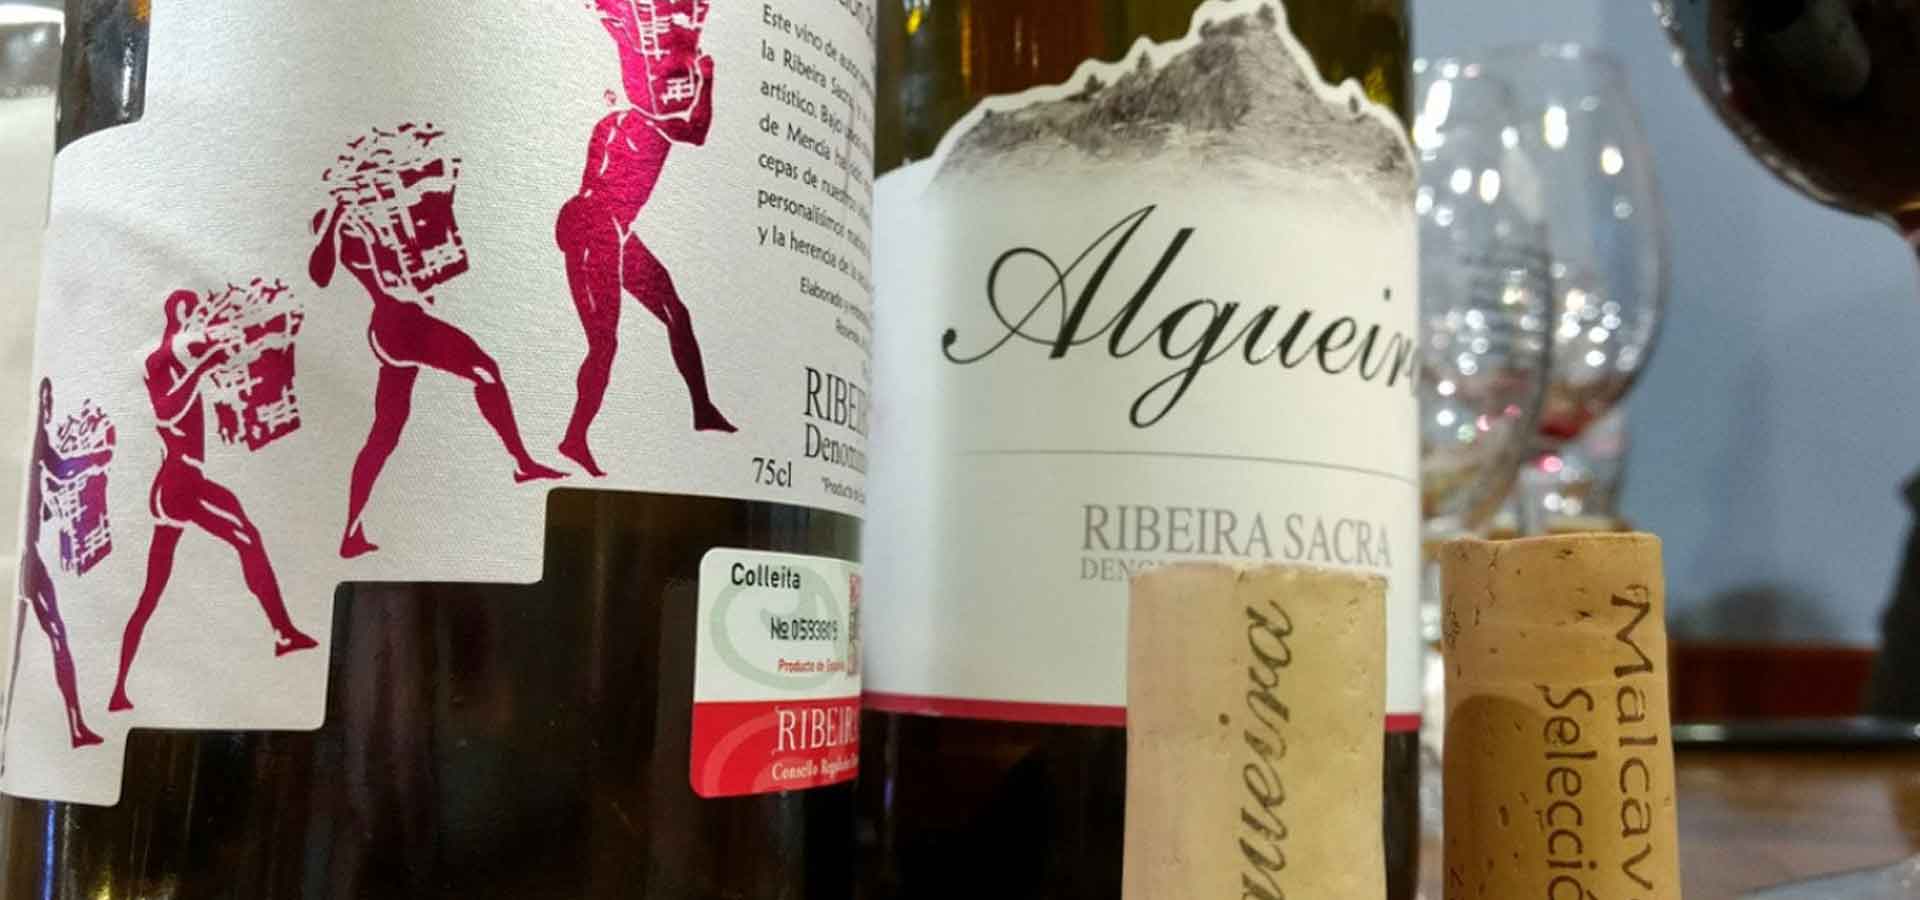 Galician wines